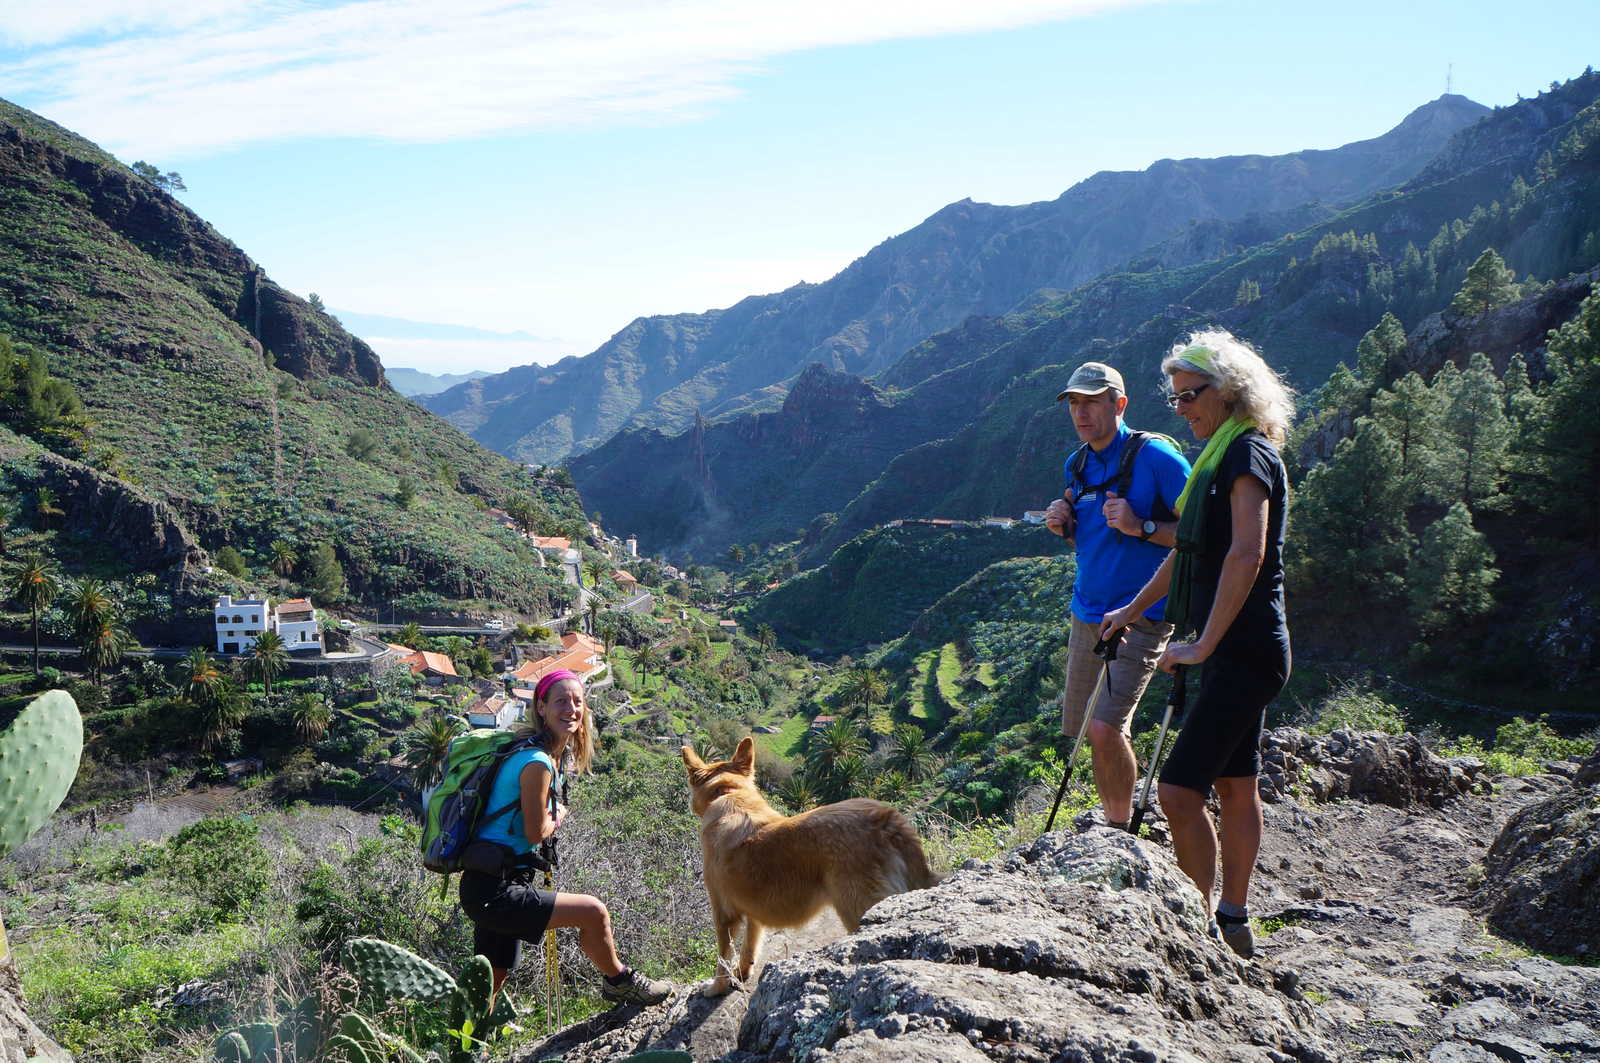 Image Tenerife et La Gomera, randonnées paradisiaques